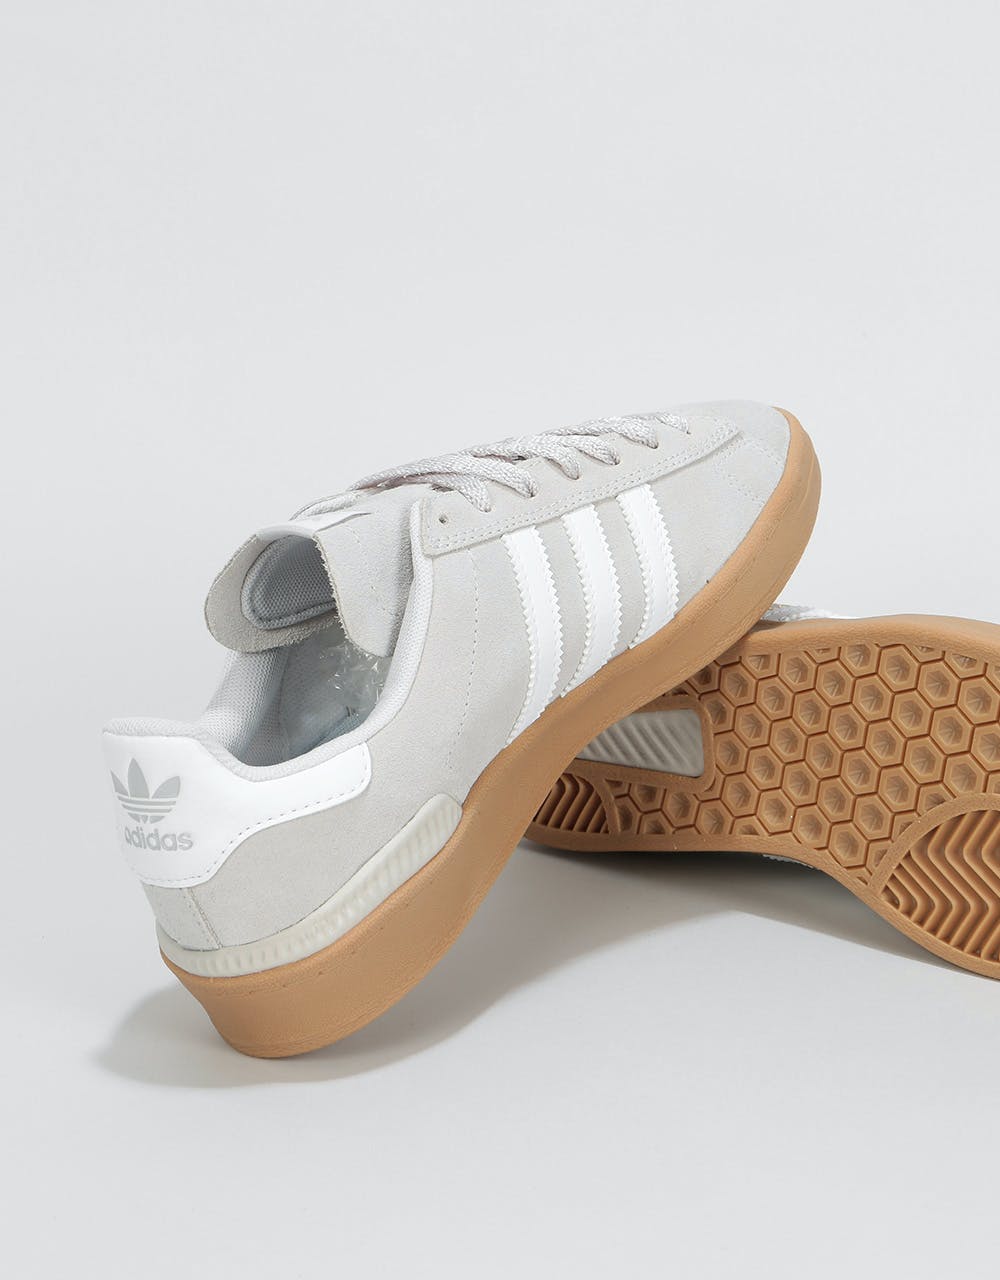 Adidas Campus ADV Skate Shoes - Grey/White/Gold Metallic